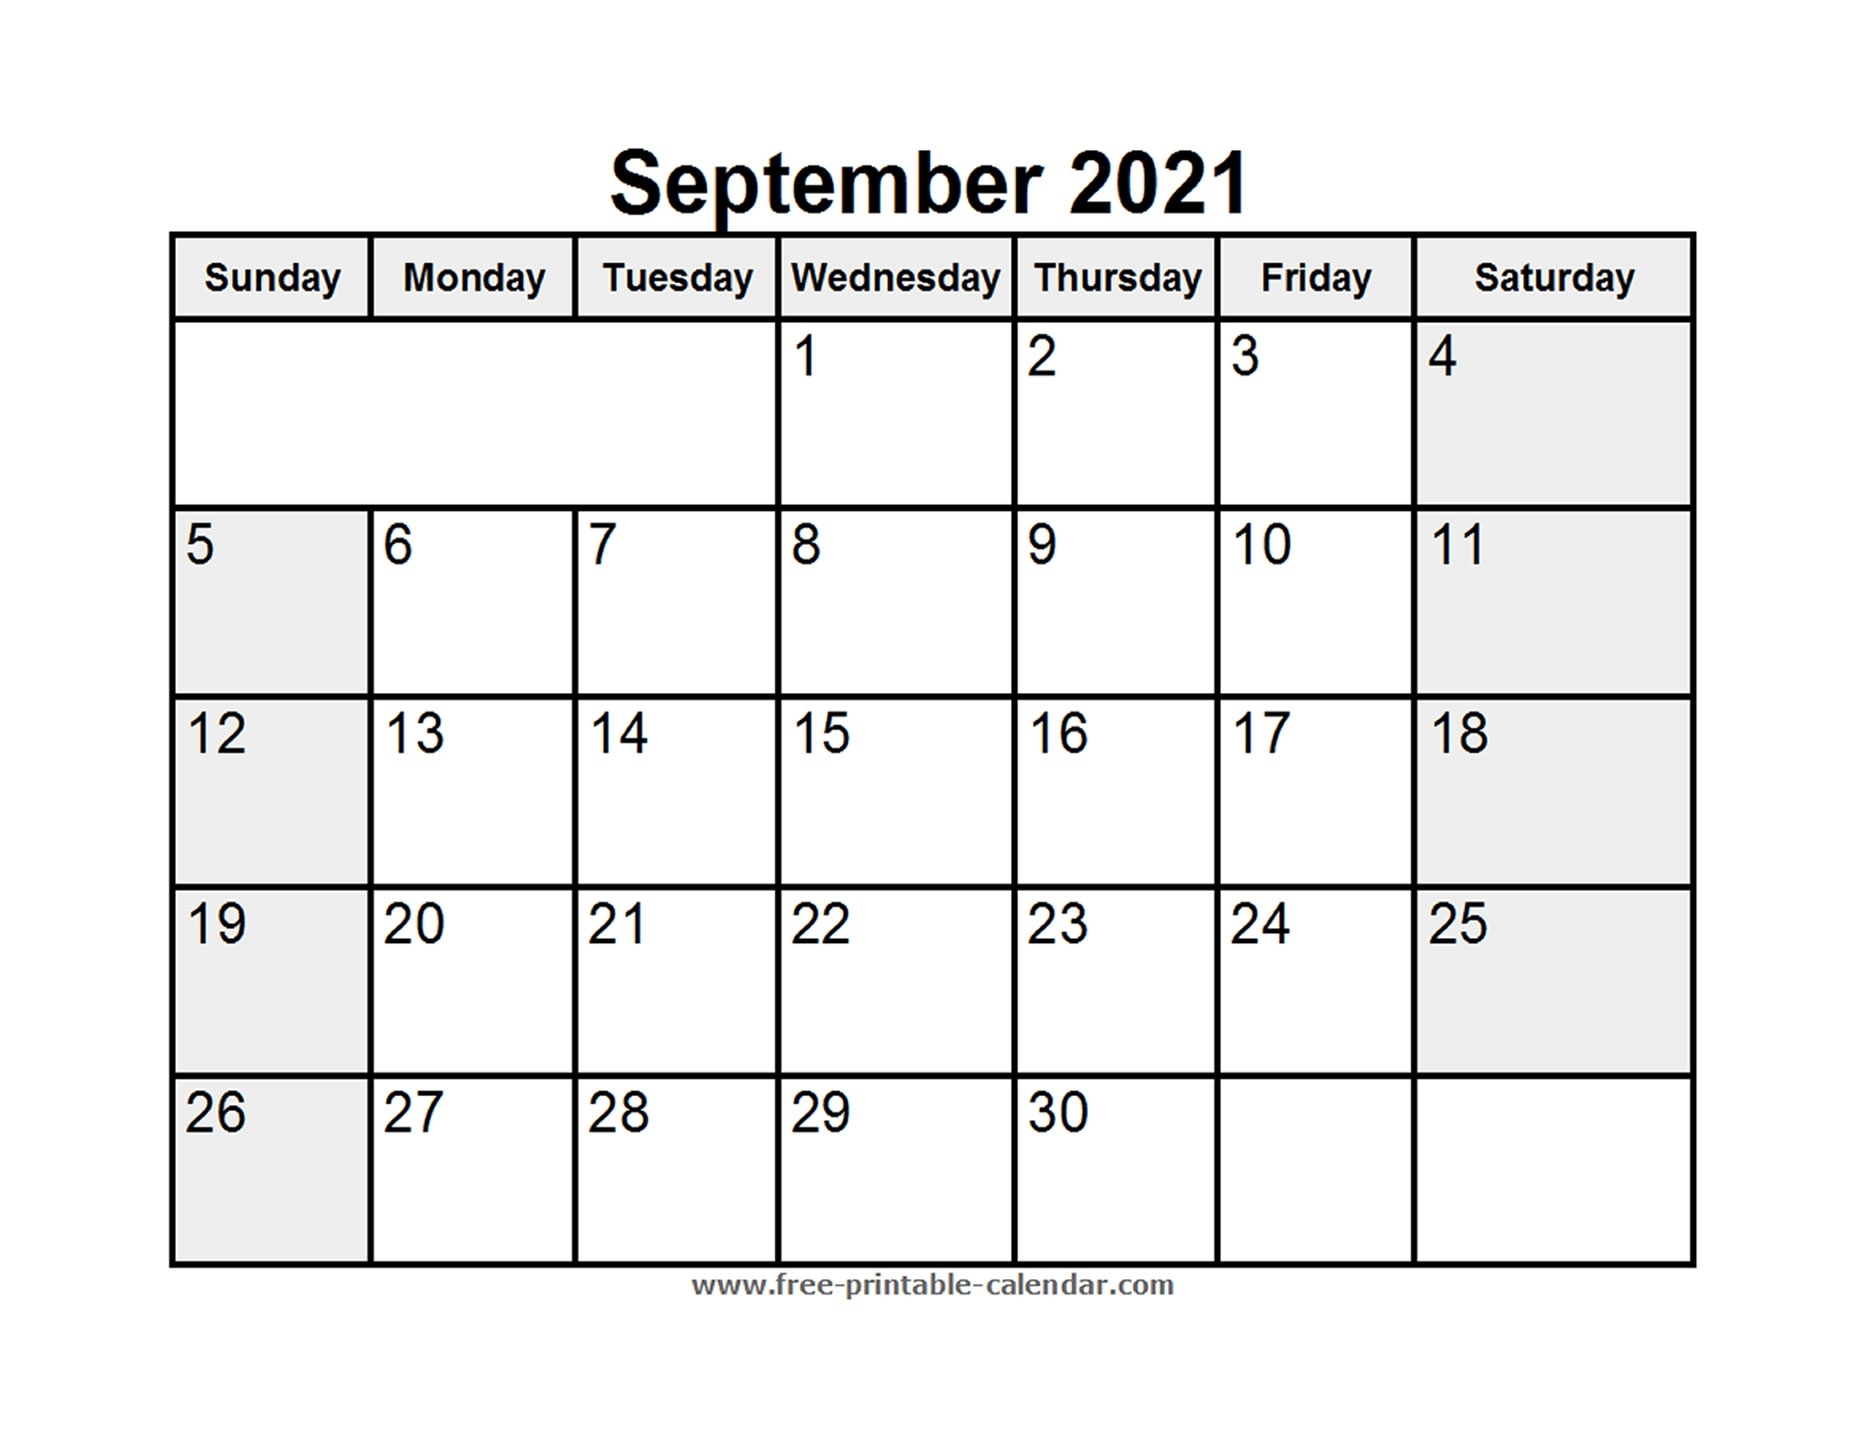 Printable September 2021 Calendar - Free-Printable-Calendar September 2021 Calendar With Holidays Printable